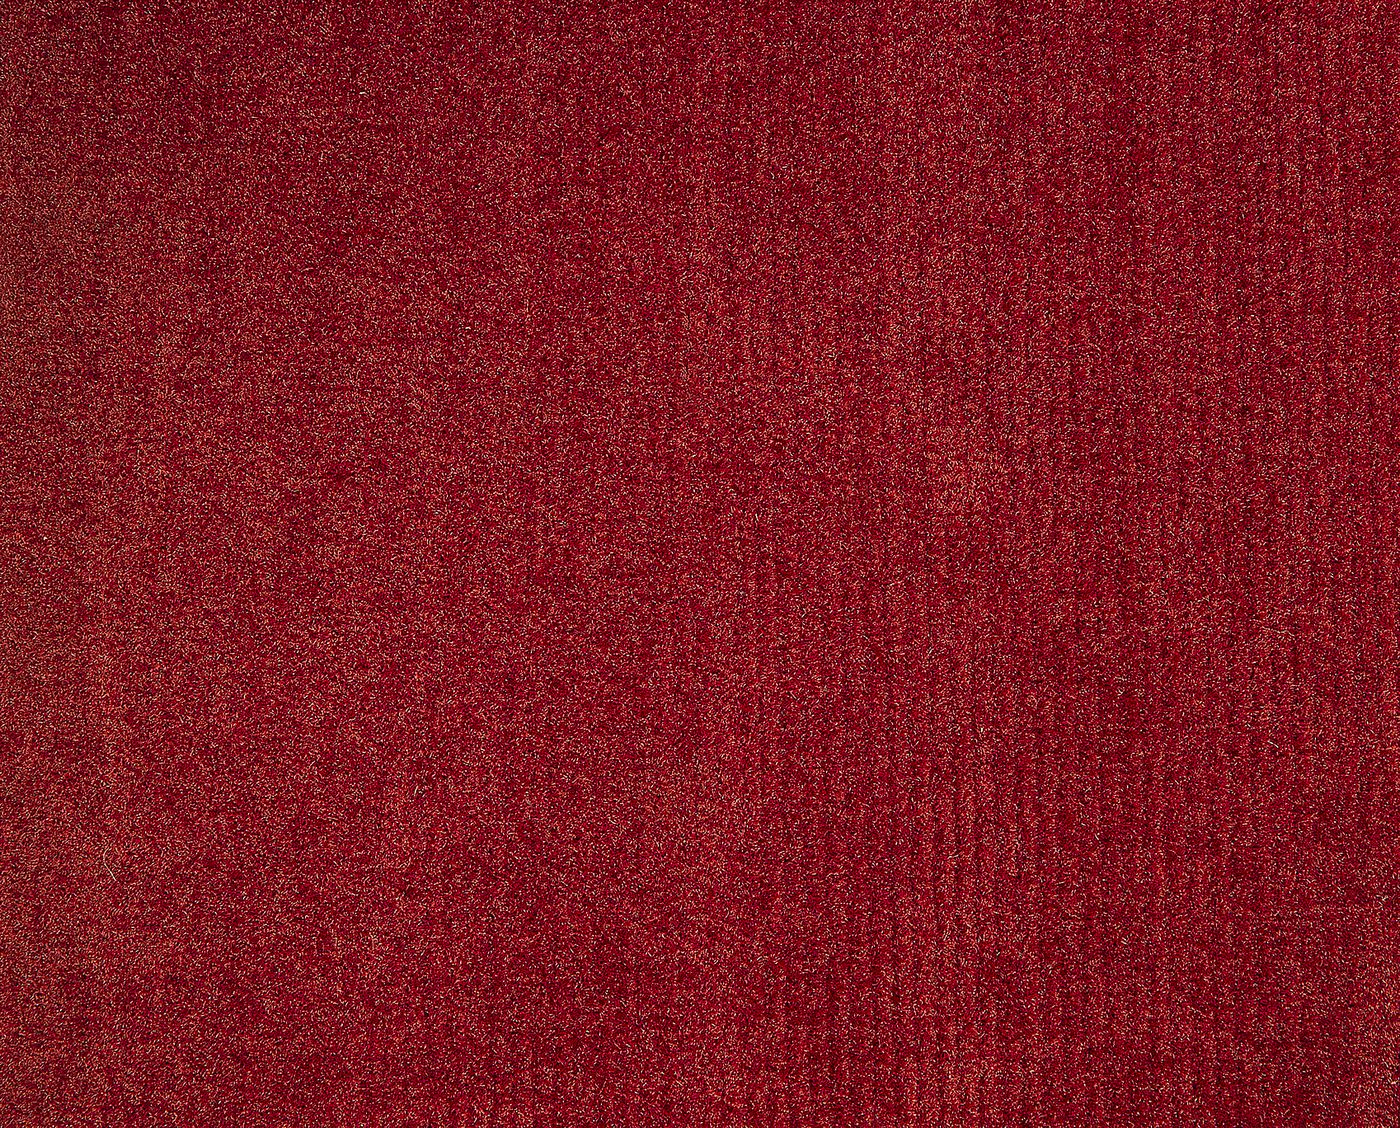 Teppichsatz
Carpet set
Set de moquettes
Zestaw dywaników
Vloerb